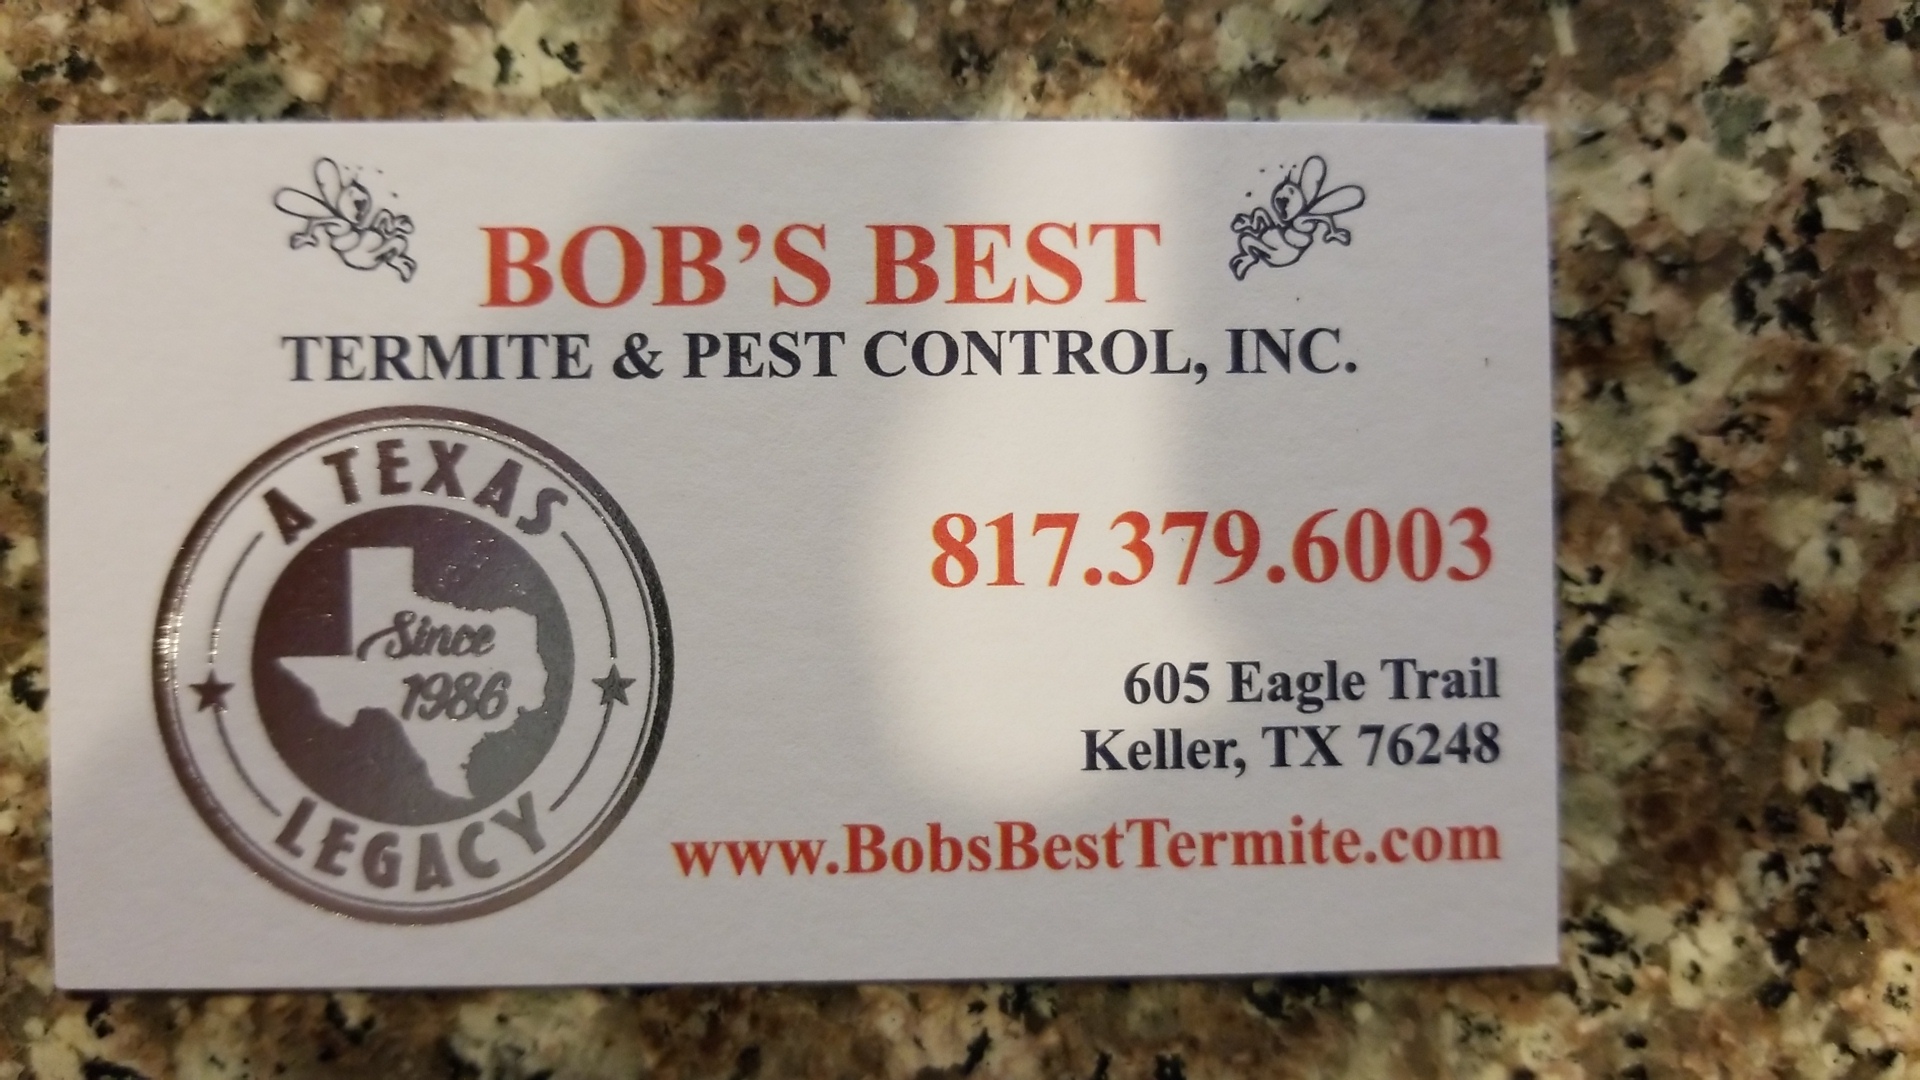 Bob's Best Termite & Pest Control